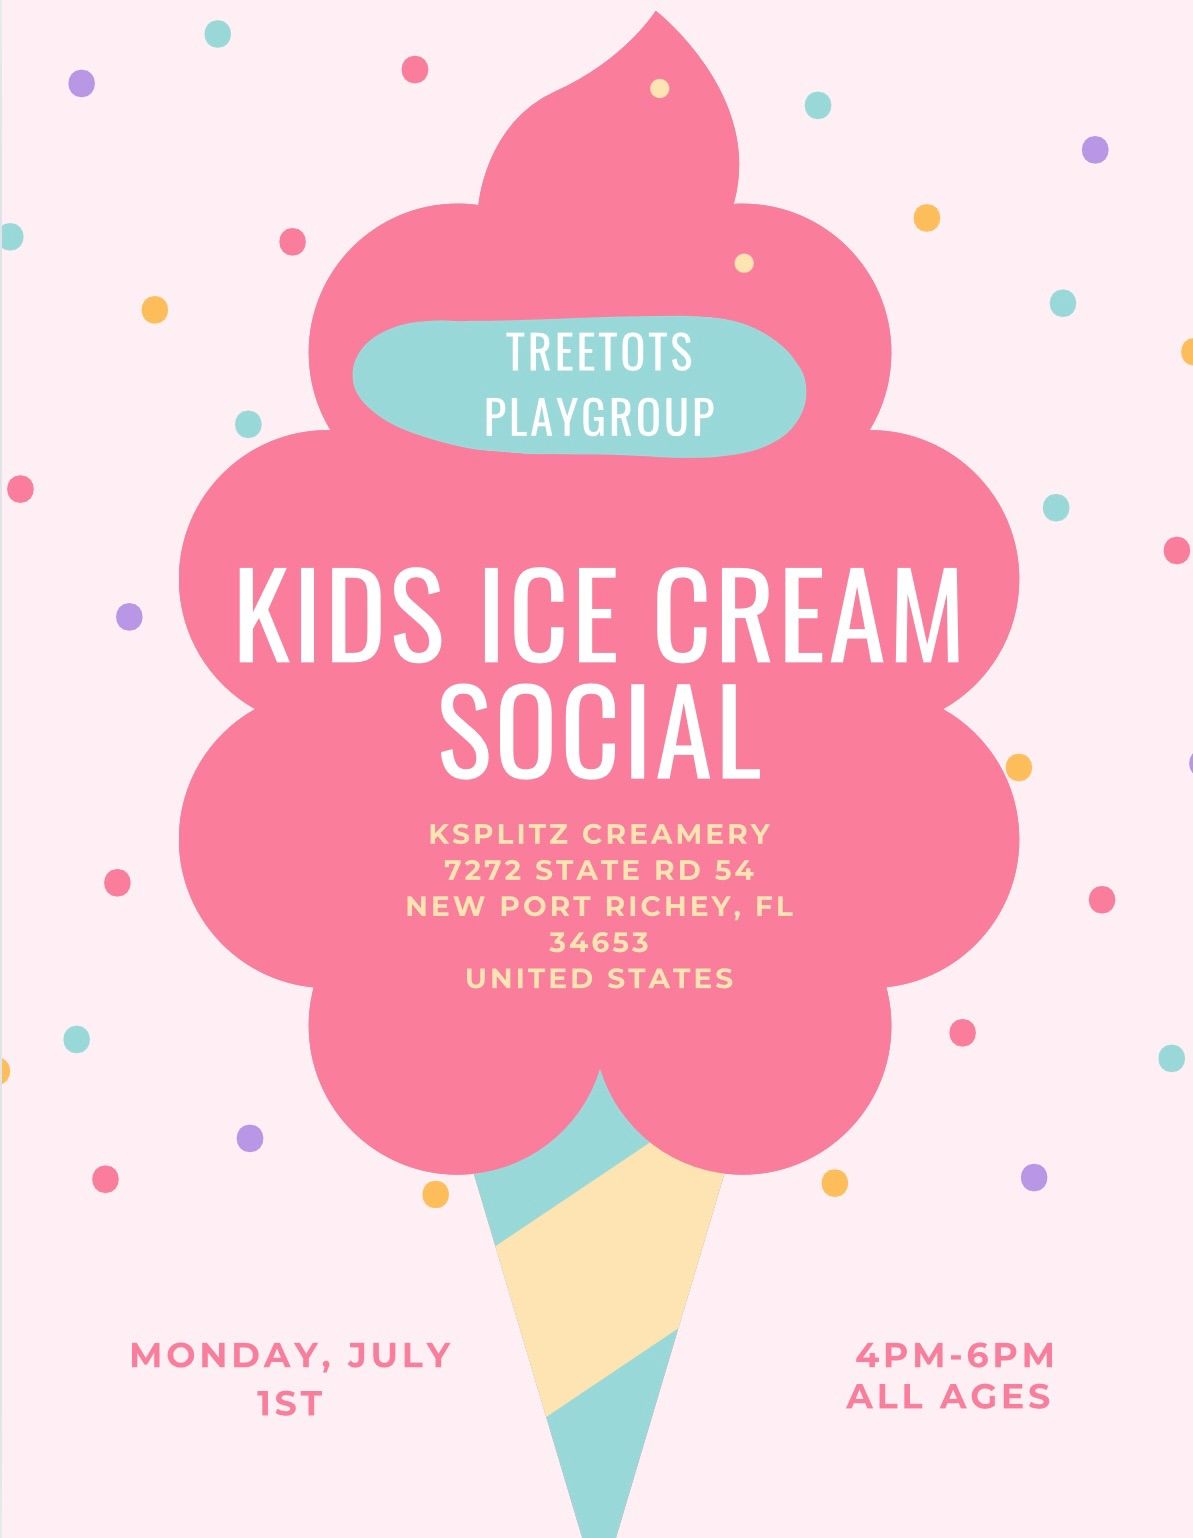 Kids Ice Cream Social @ KSplitz Creamery